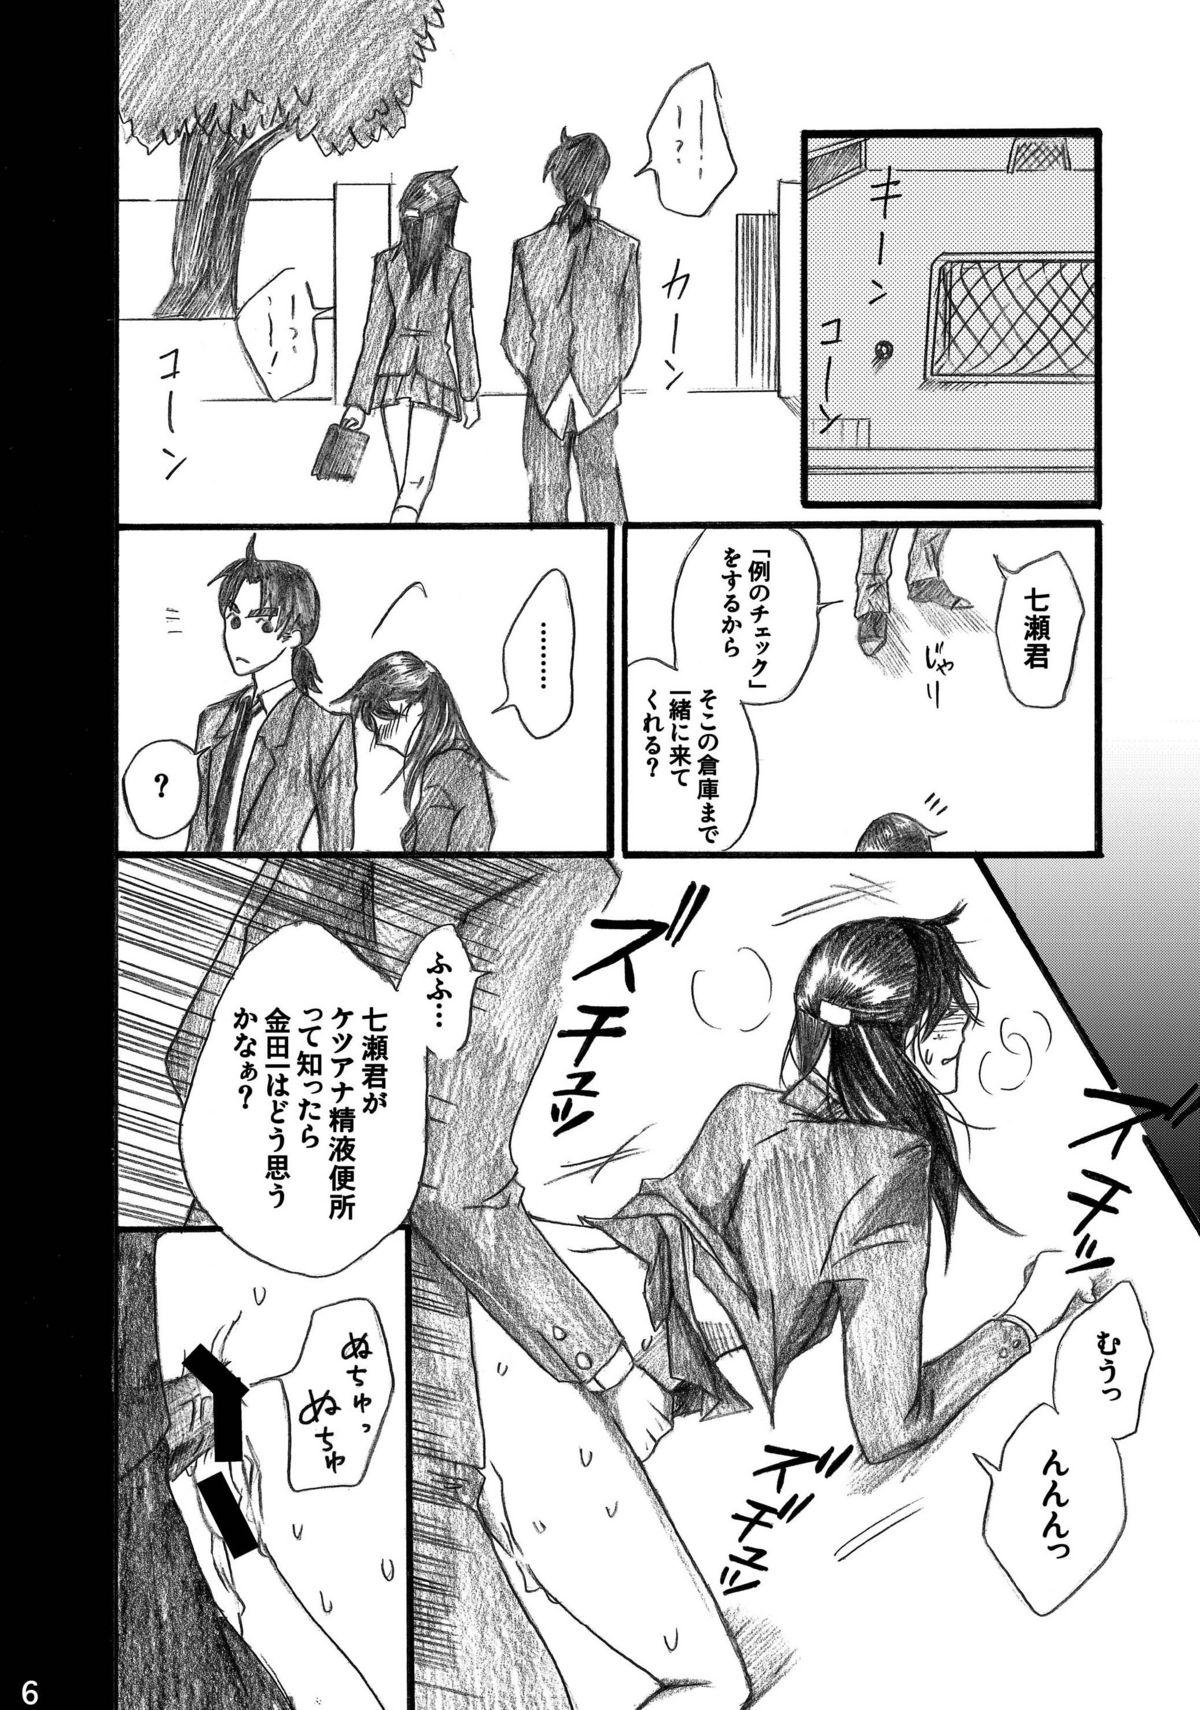  Nanase Shoujo no Jikenbo Case 4 - Kindaichi shounen no jikenbo Lady - Page 6